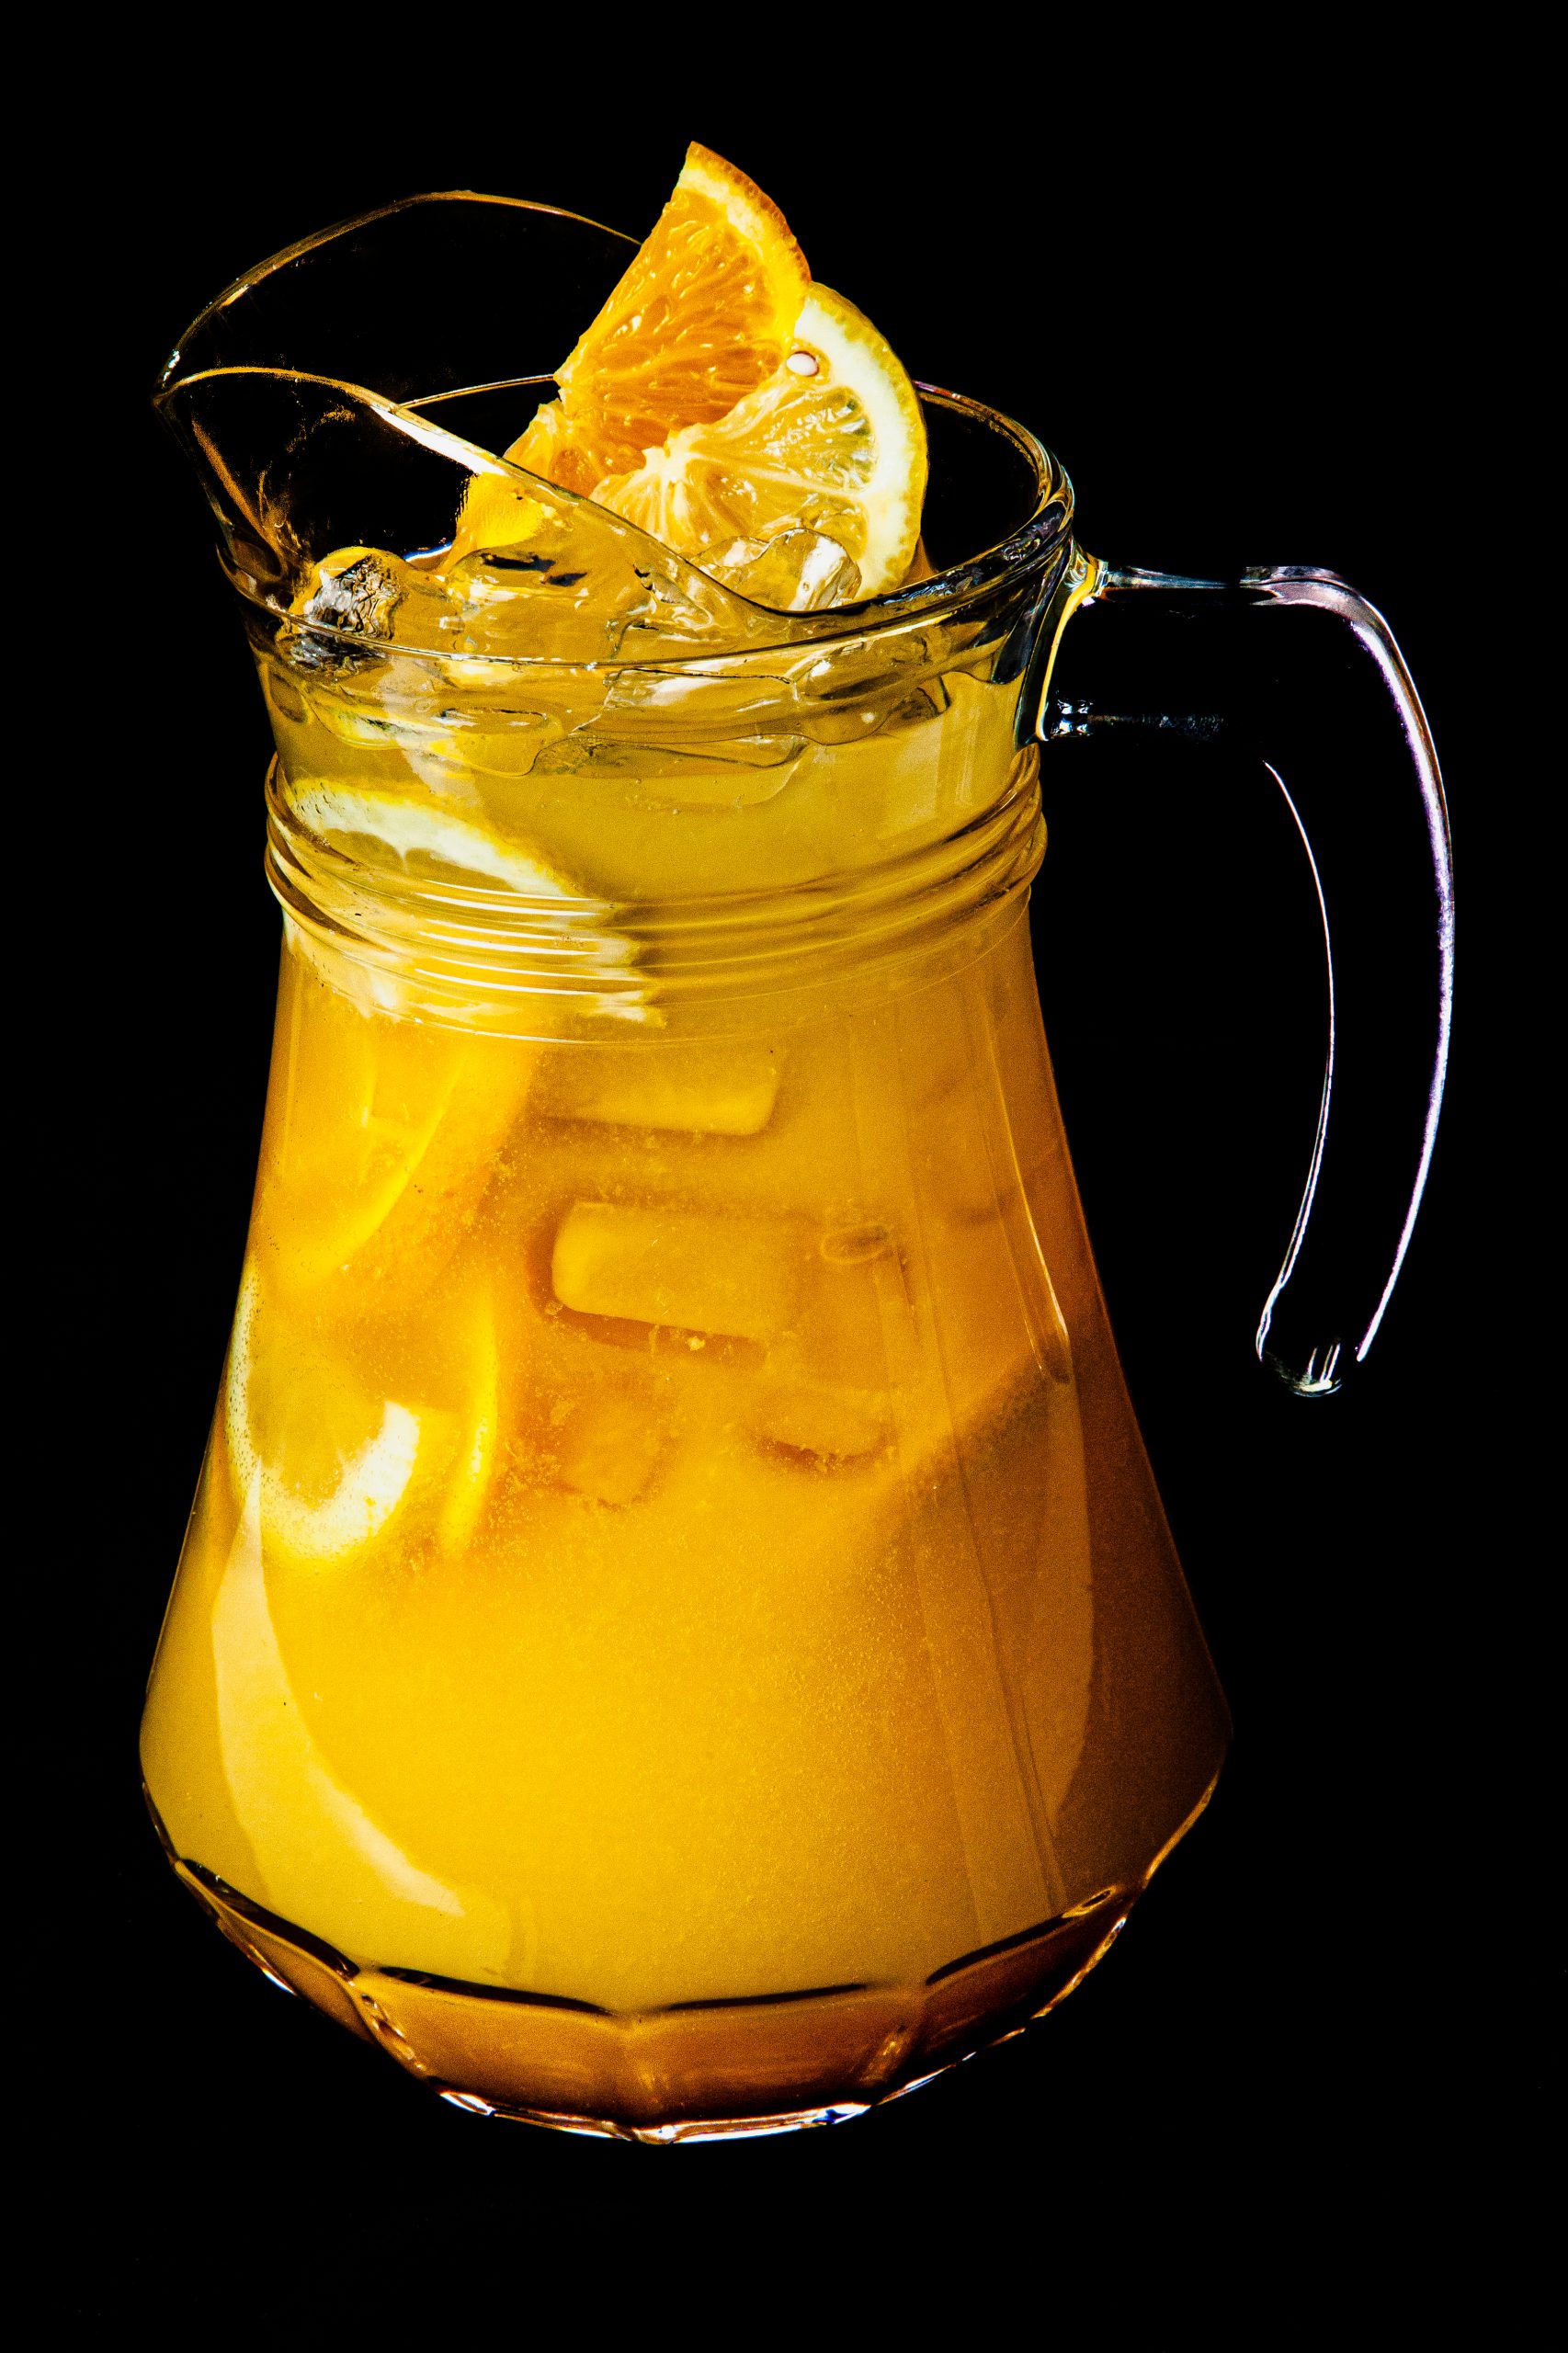 Citrus Lemonade